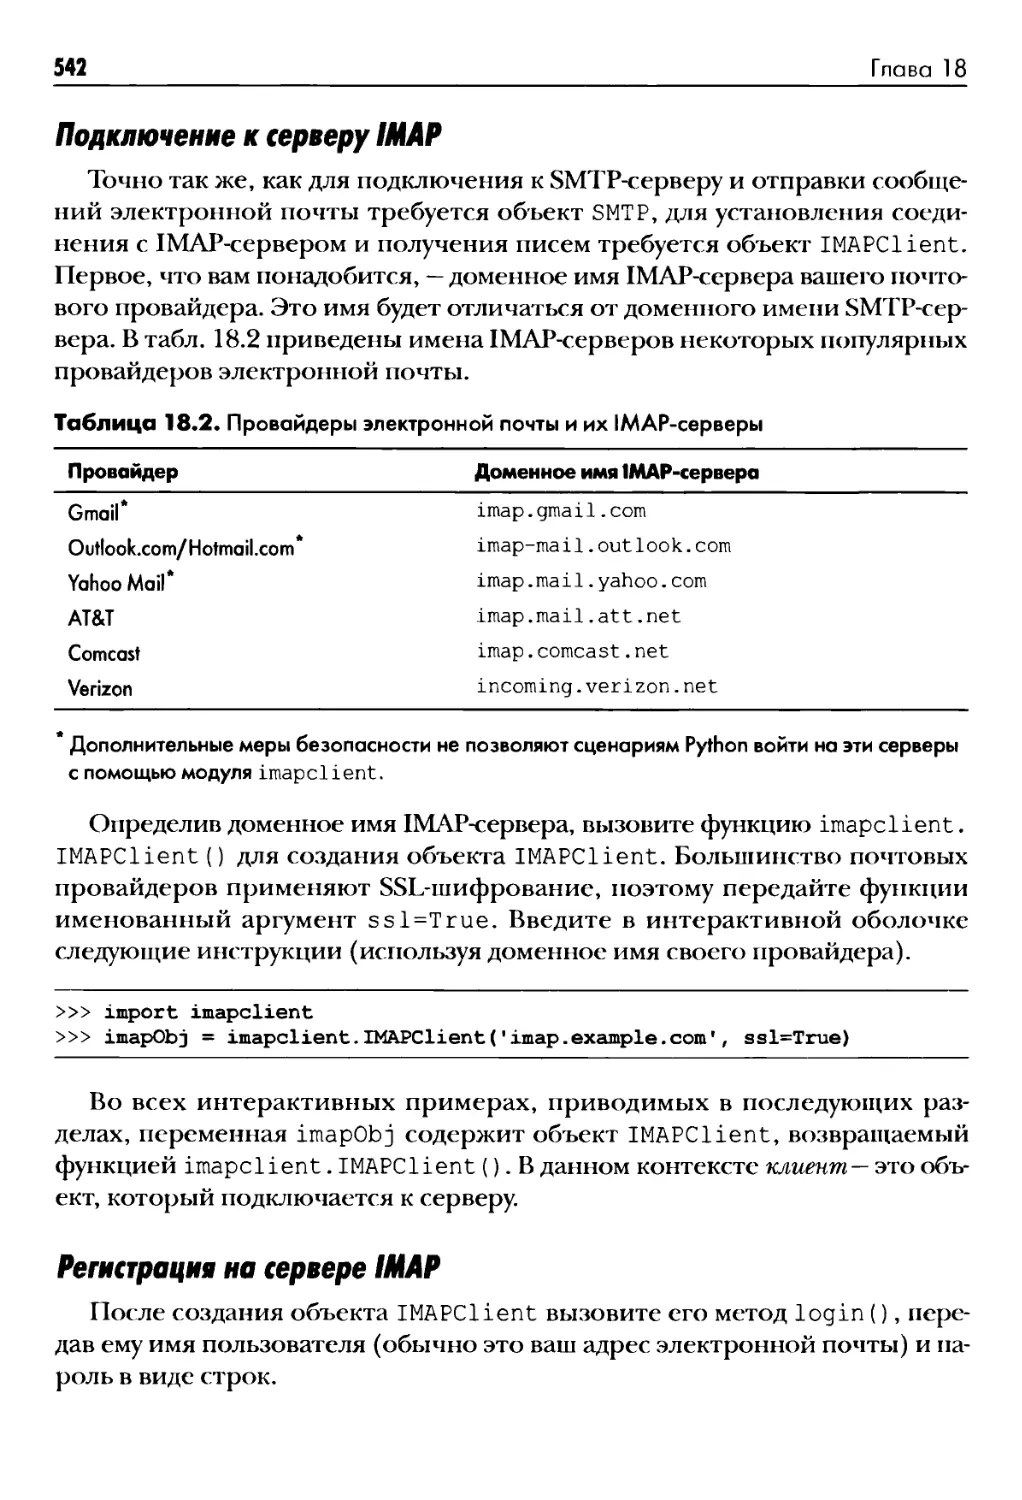 Регистрация на сервере IMAP